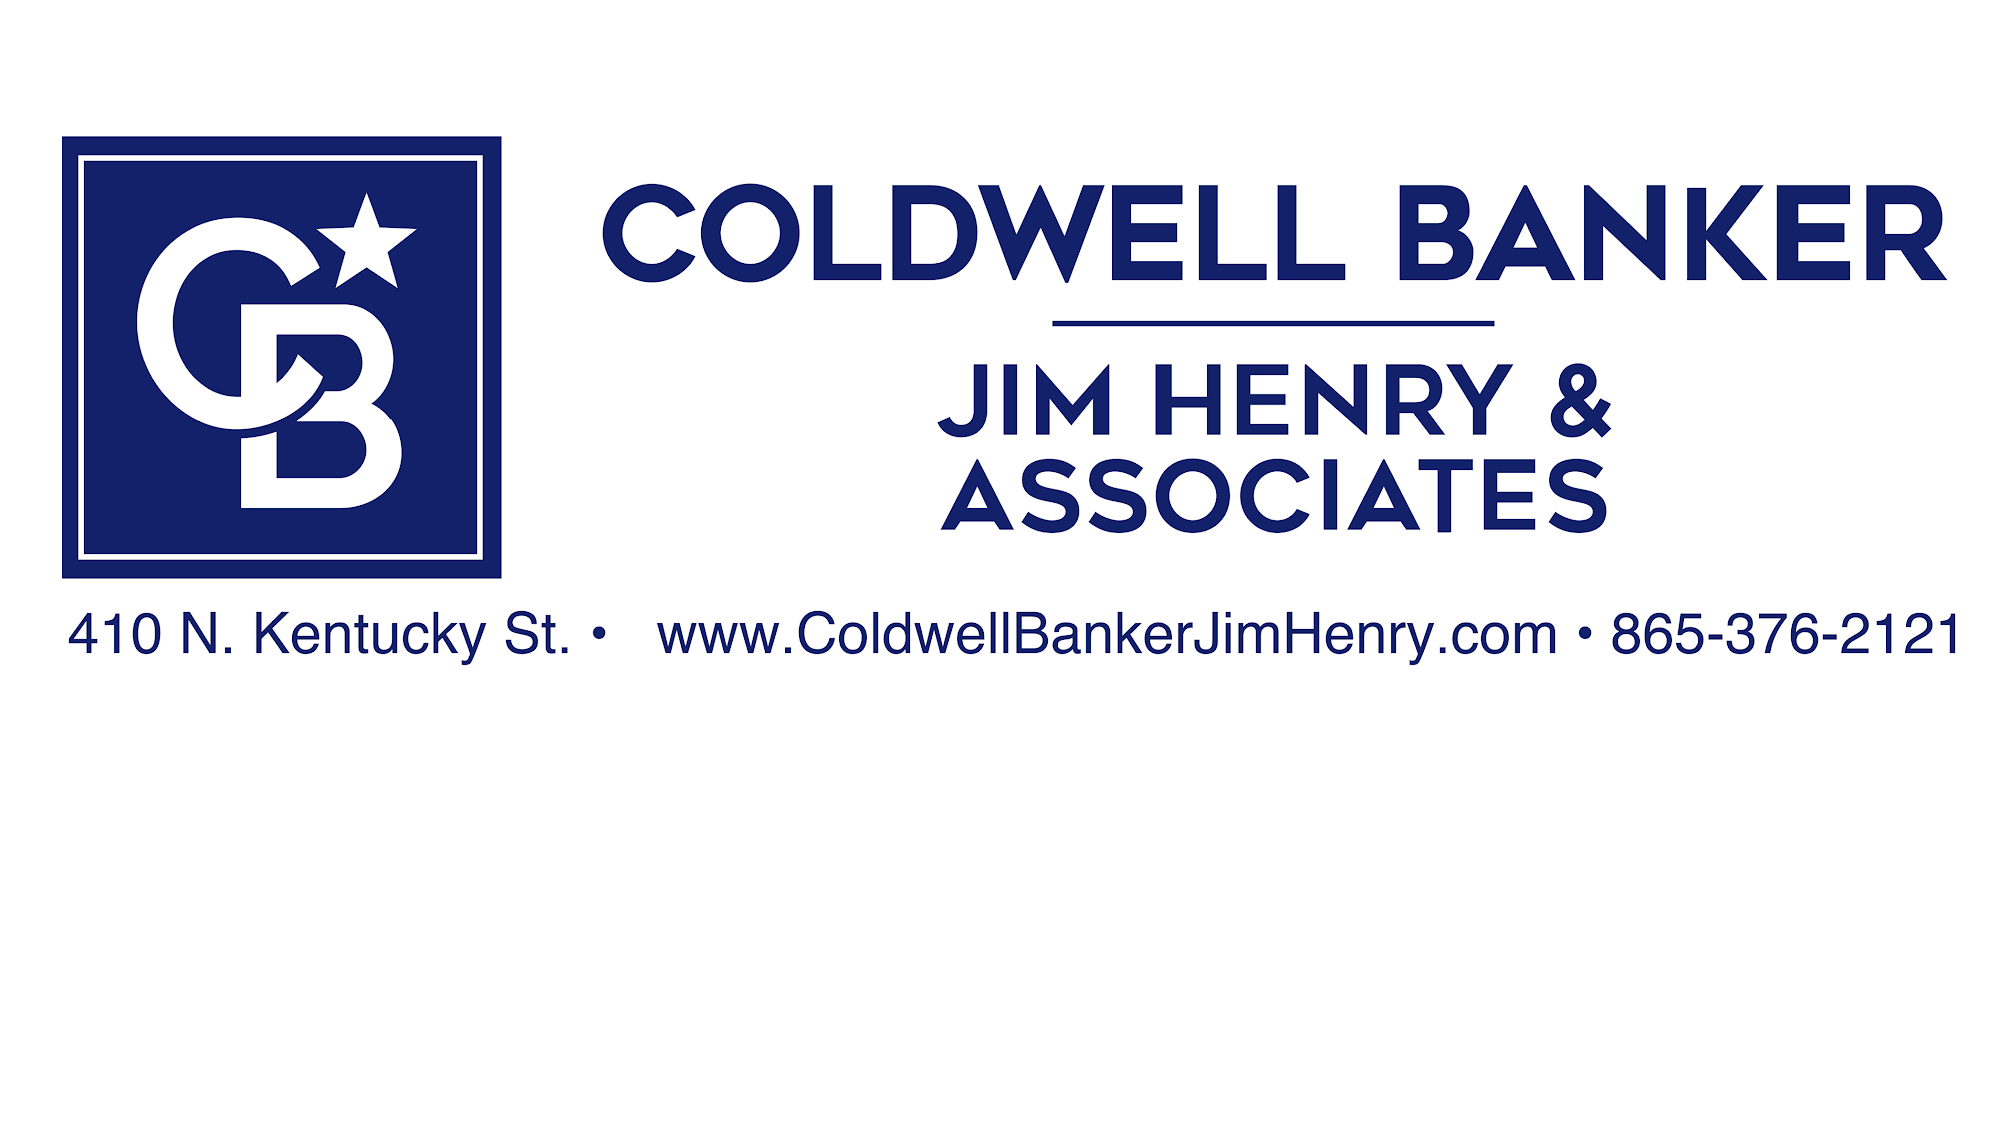 Coldwell Banker Jim Henry & Associates 410 N Kentucky St, Kingston Tennessee 37763